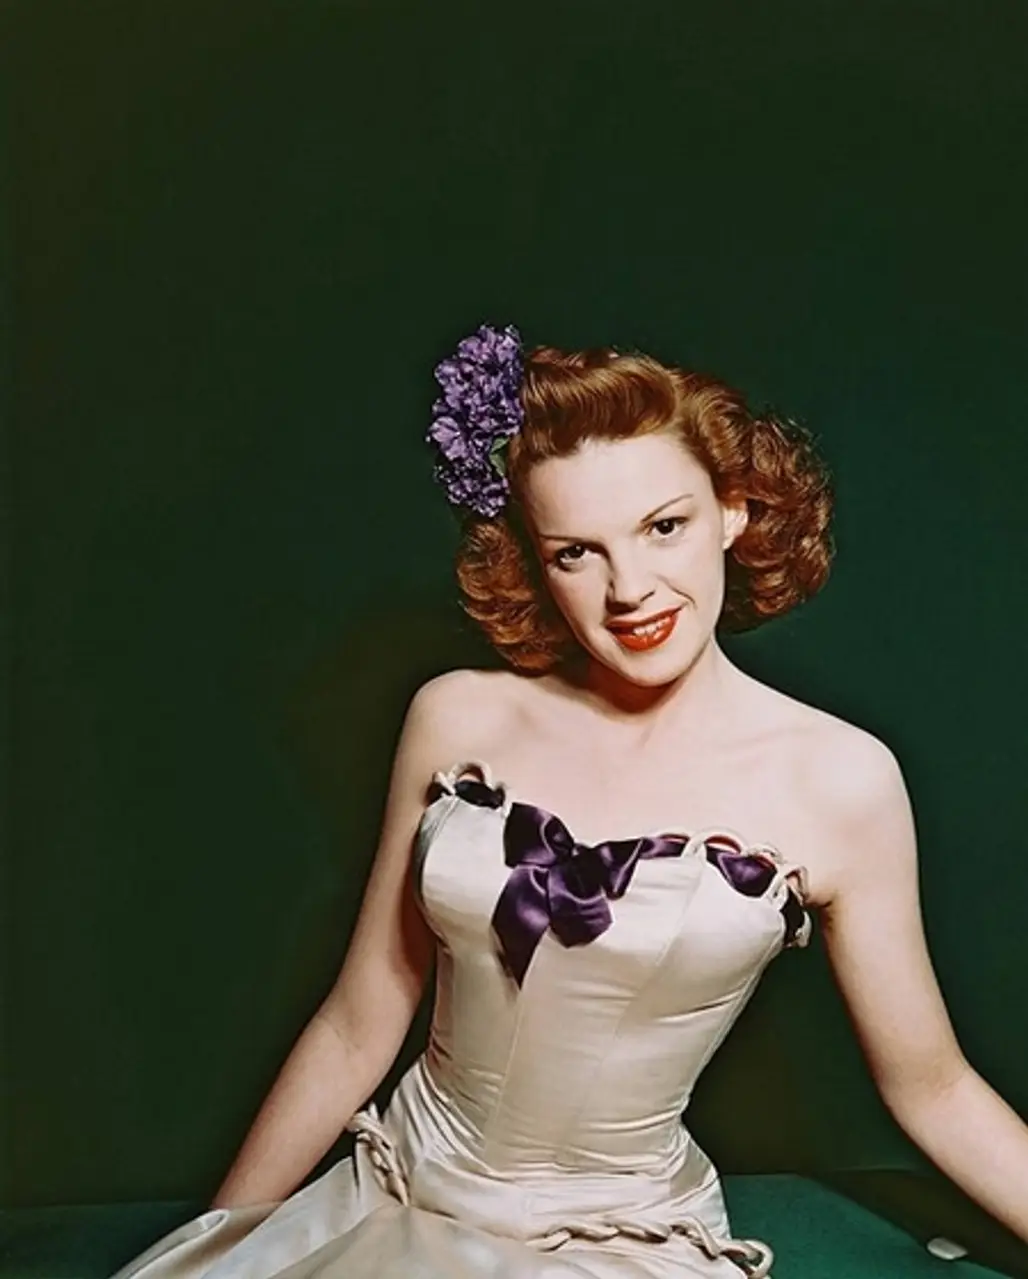 Judy Garland, American Actress and Singer